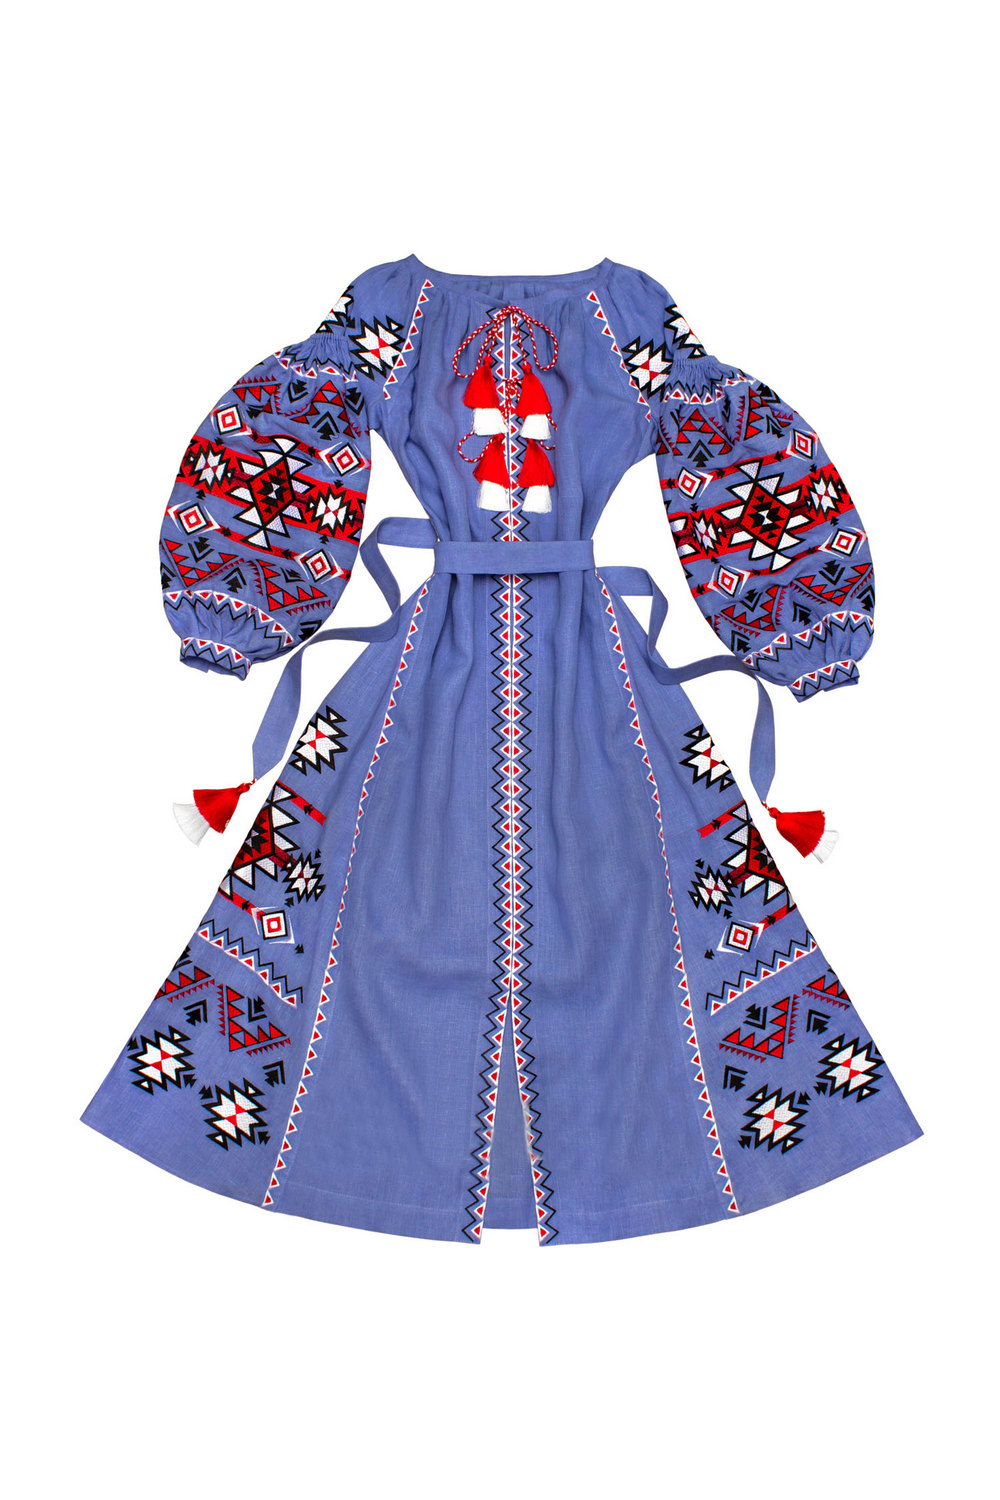 Buy Folk Festival Linen long Blue Ukrainian Vyshyvanka dress, Boho Hippie Comfortable embroidered dress